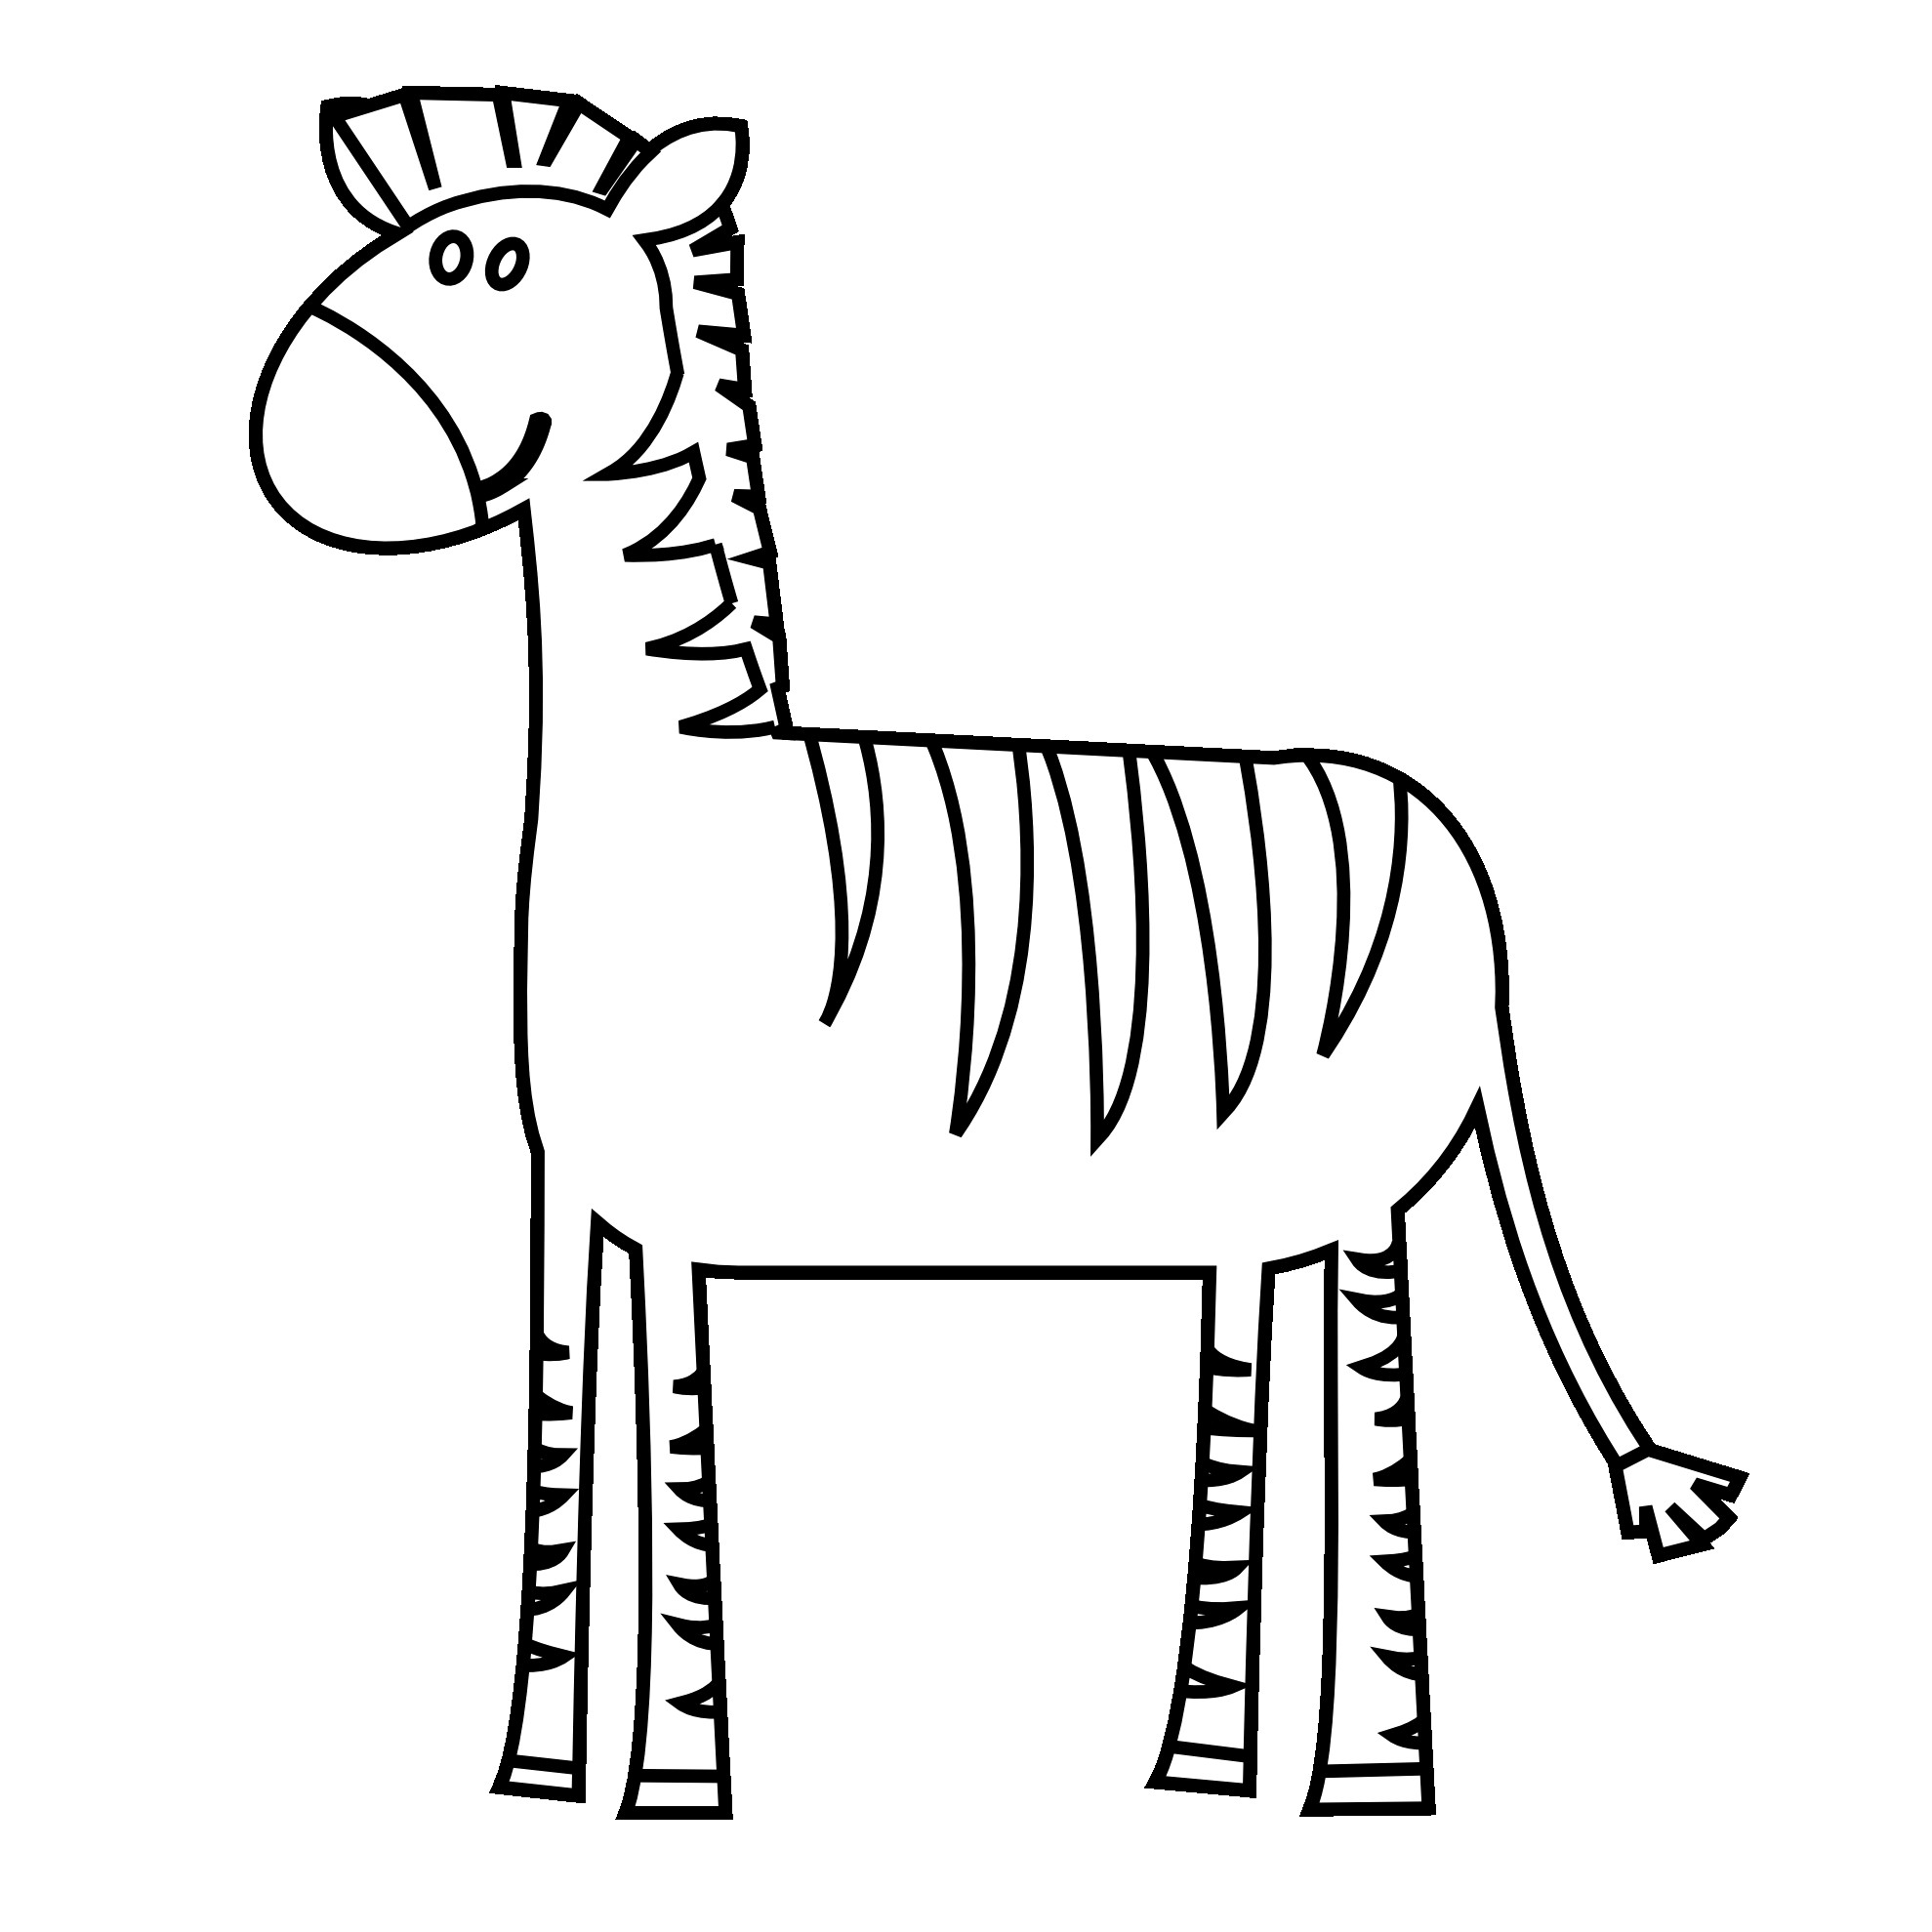 Zebra drawing easy.